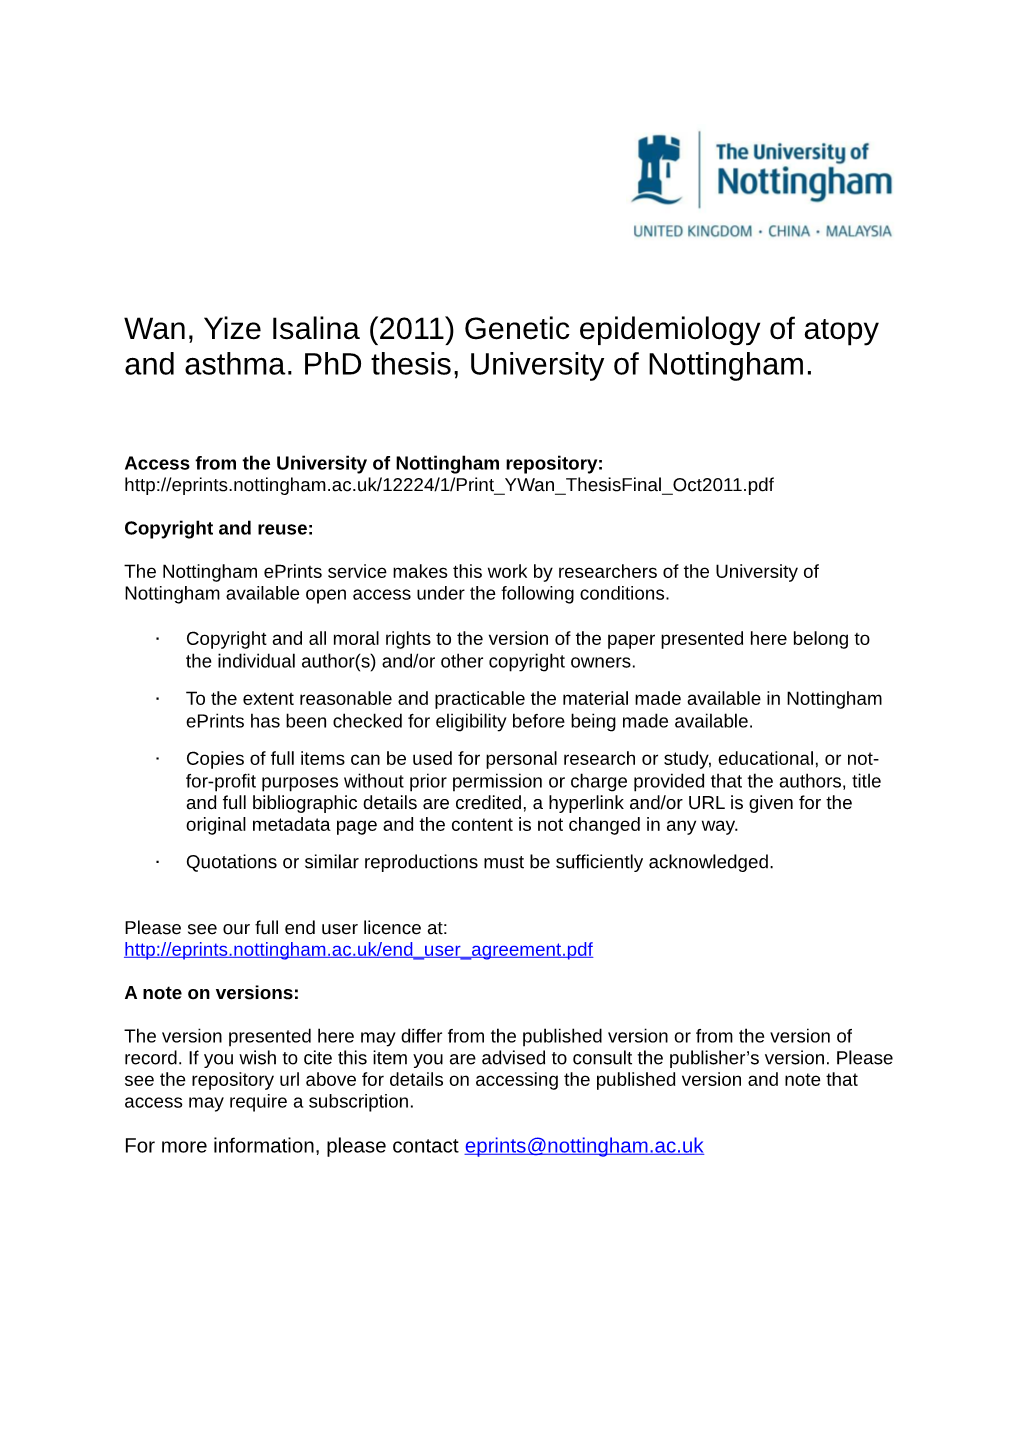 Wan, Yize Isalina (2011) Genetic Epidemiology of Atopy and Asthma